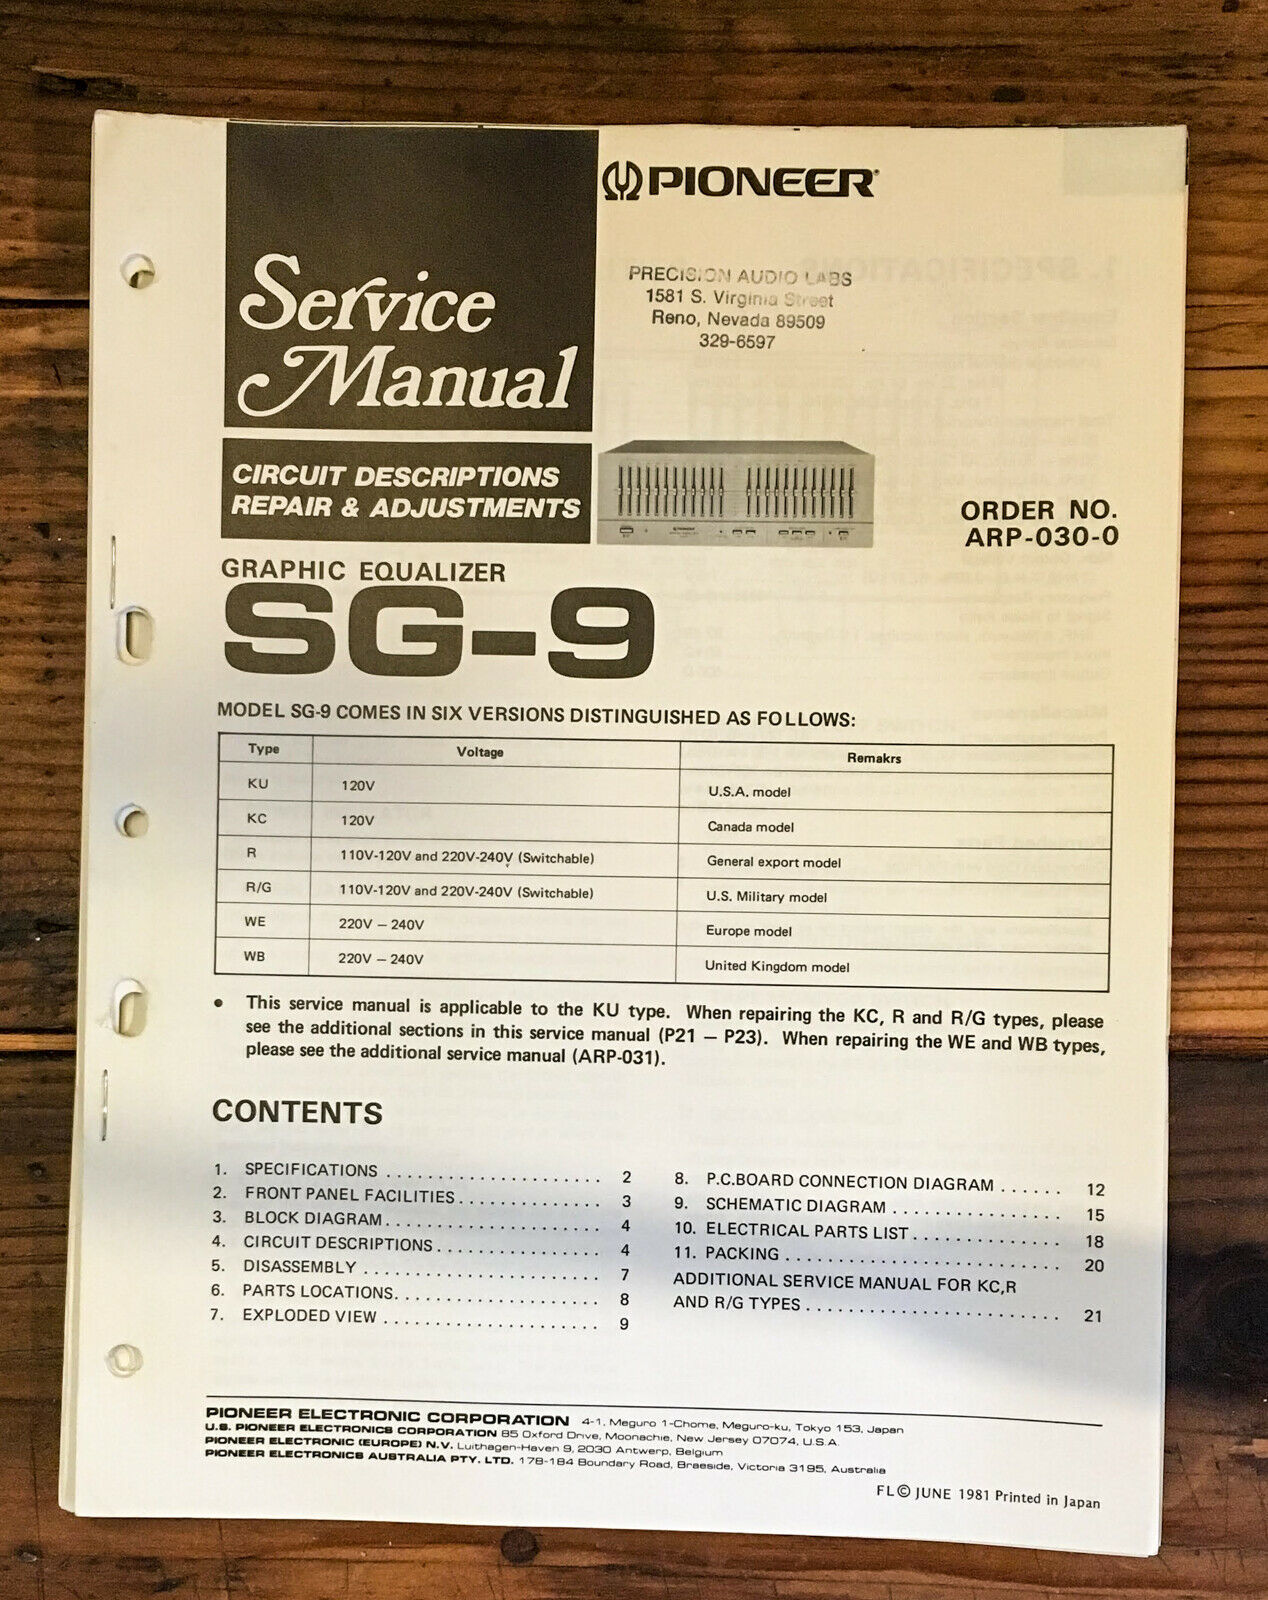 Service Manual-Anleitung für Pioneer SG-9800 